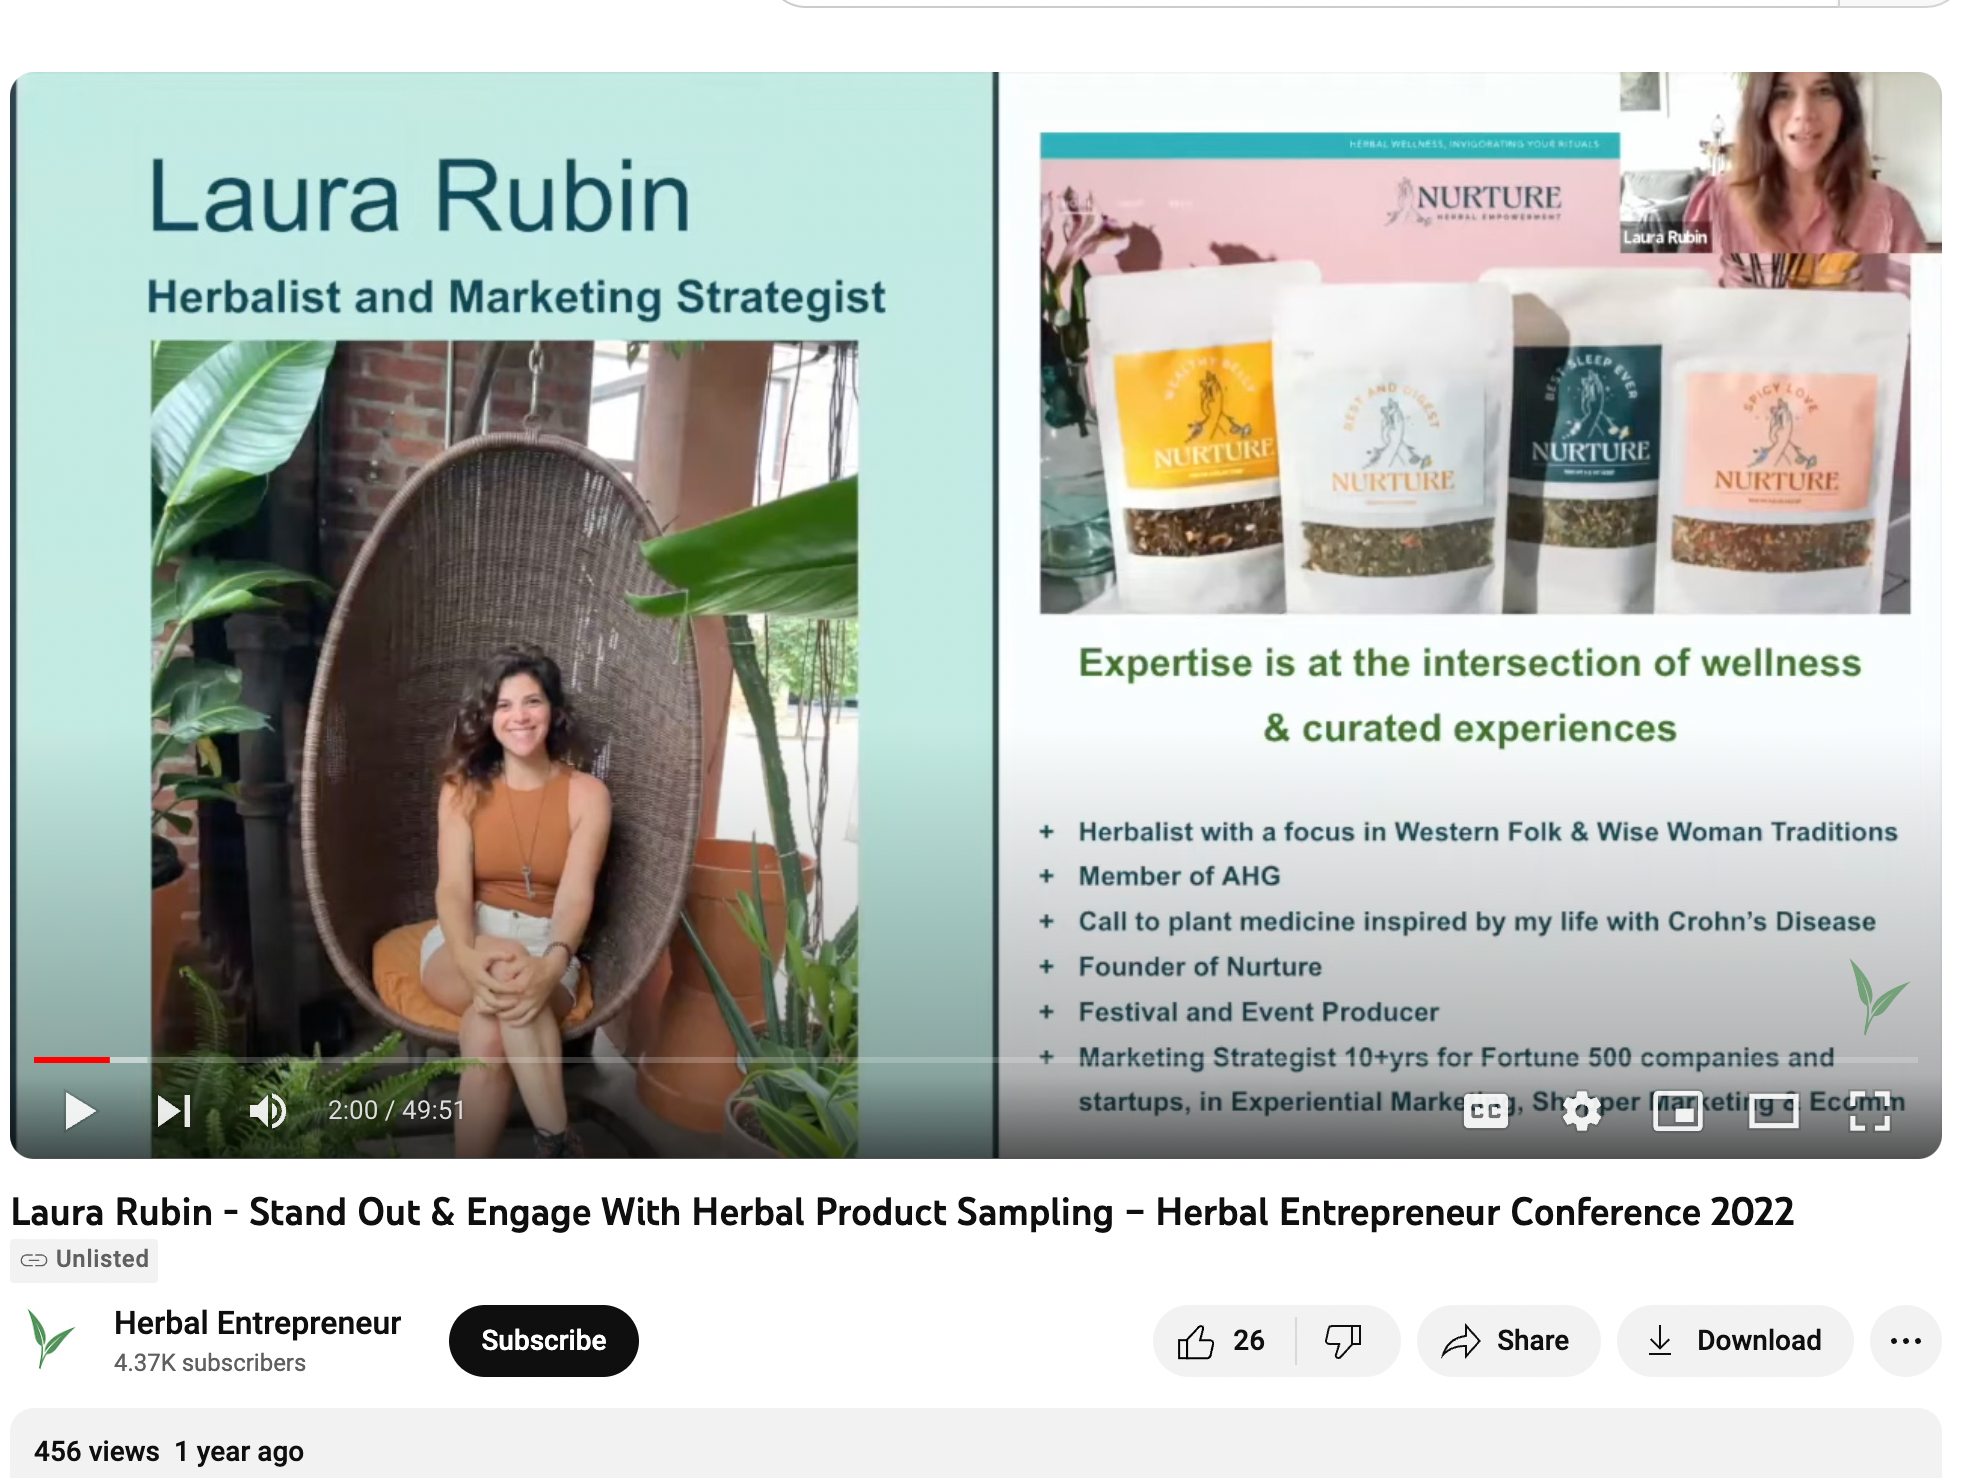 Herbal Entrepreneur features Laura Rubin, Clinical Herbalist, Flower Essences Practitioner, Herbal Educator and Marketing Strategist.